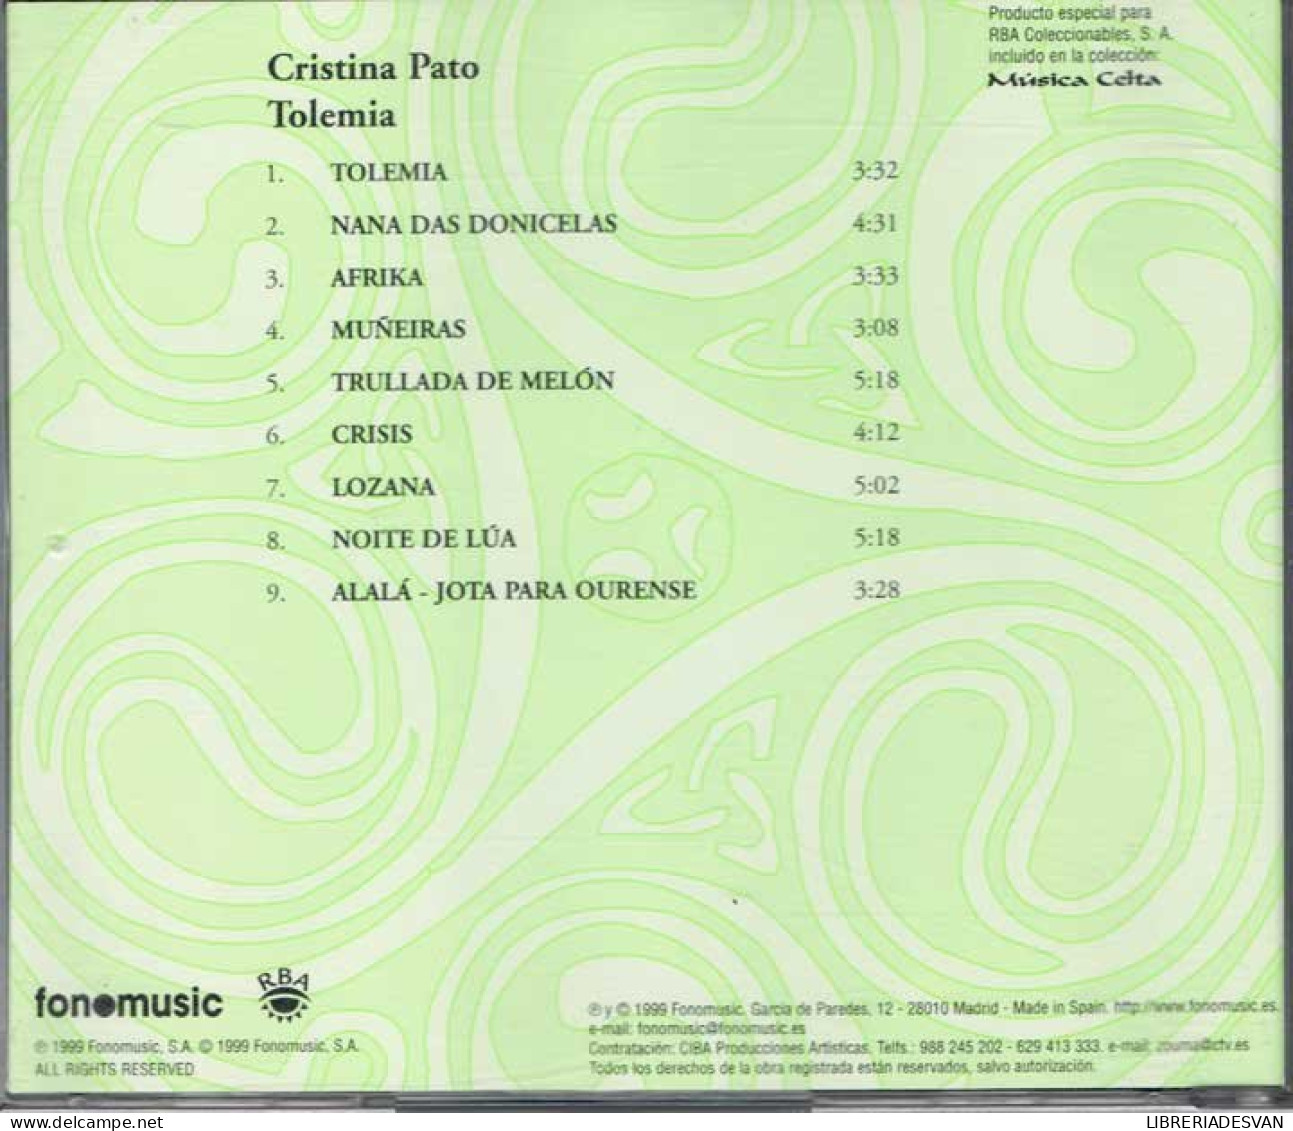 Cristina Pato - Tolemia. CD - Country & Folk